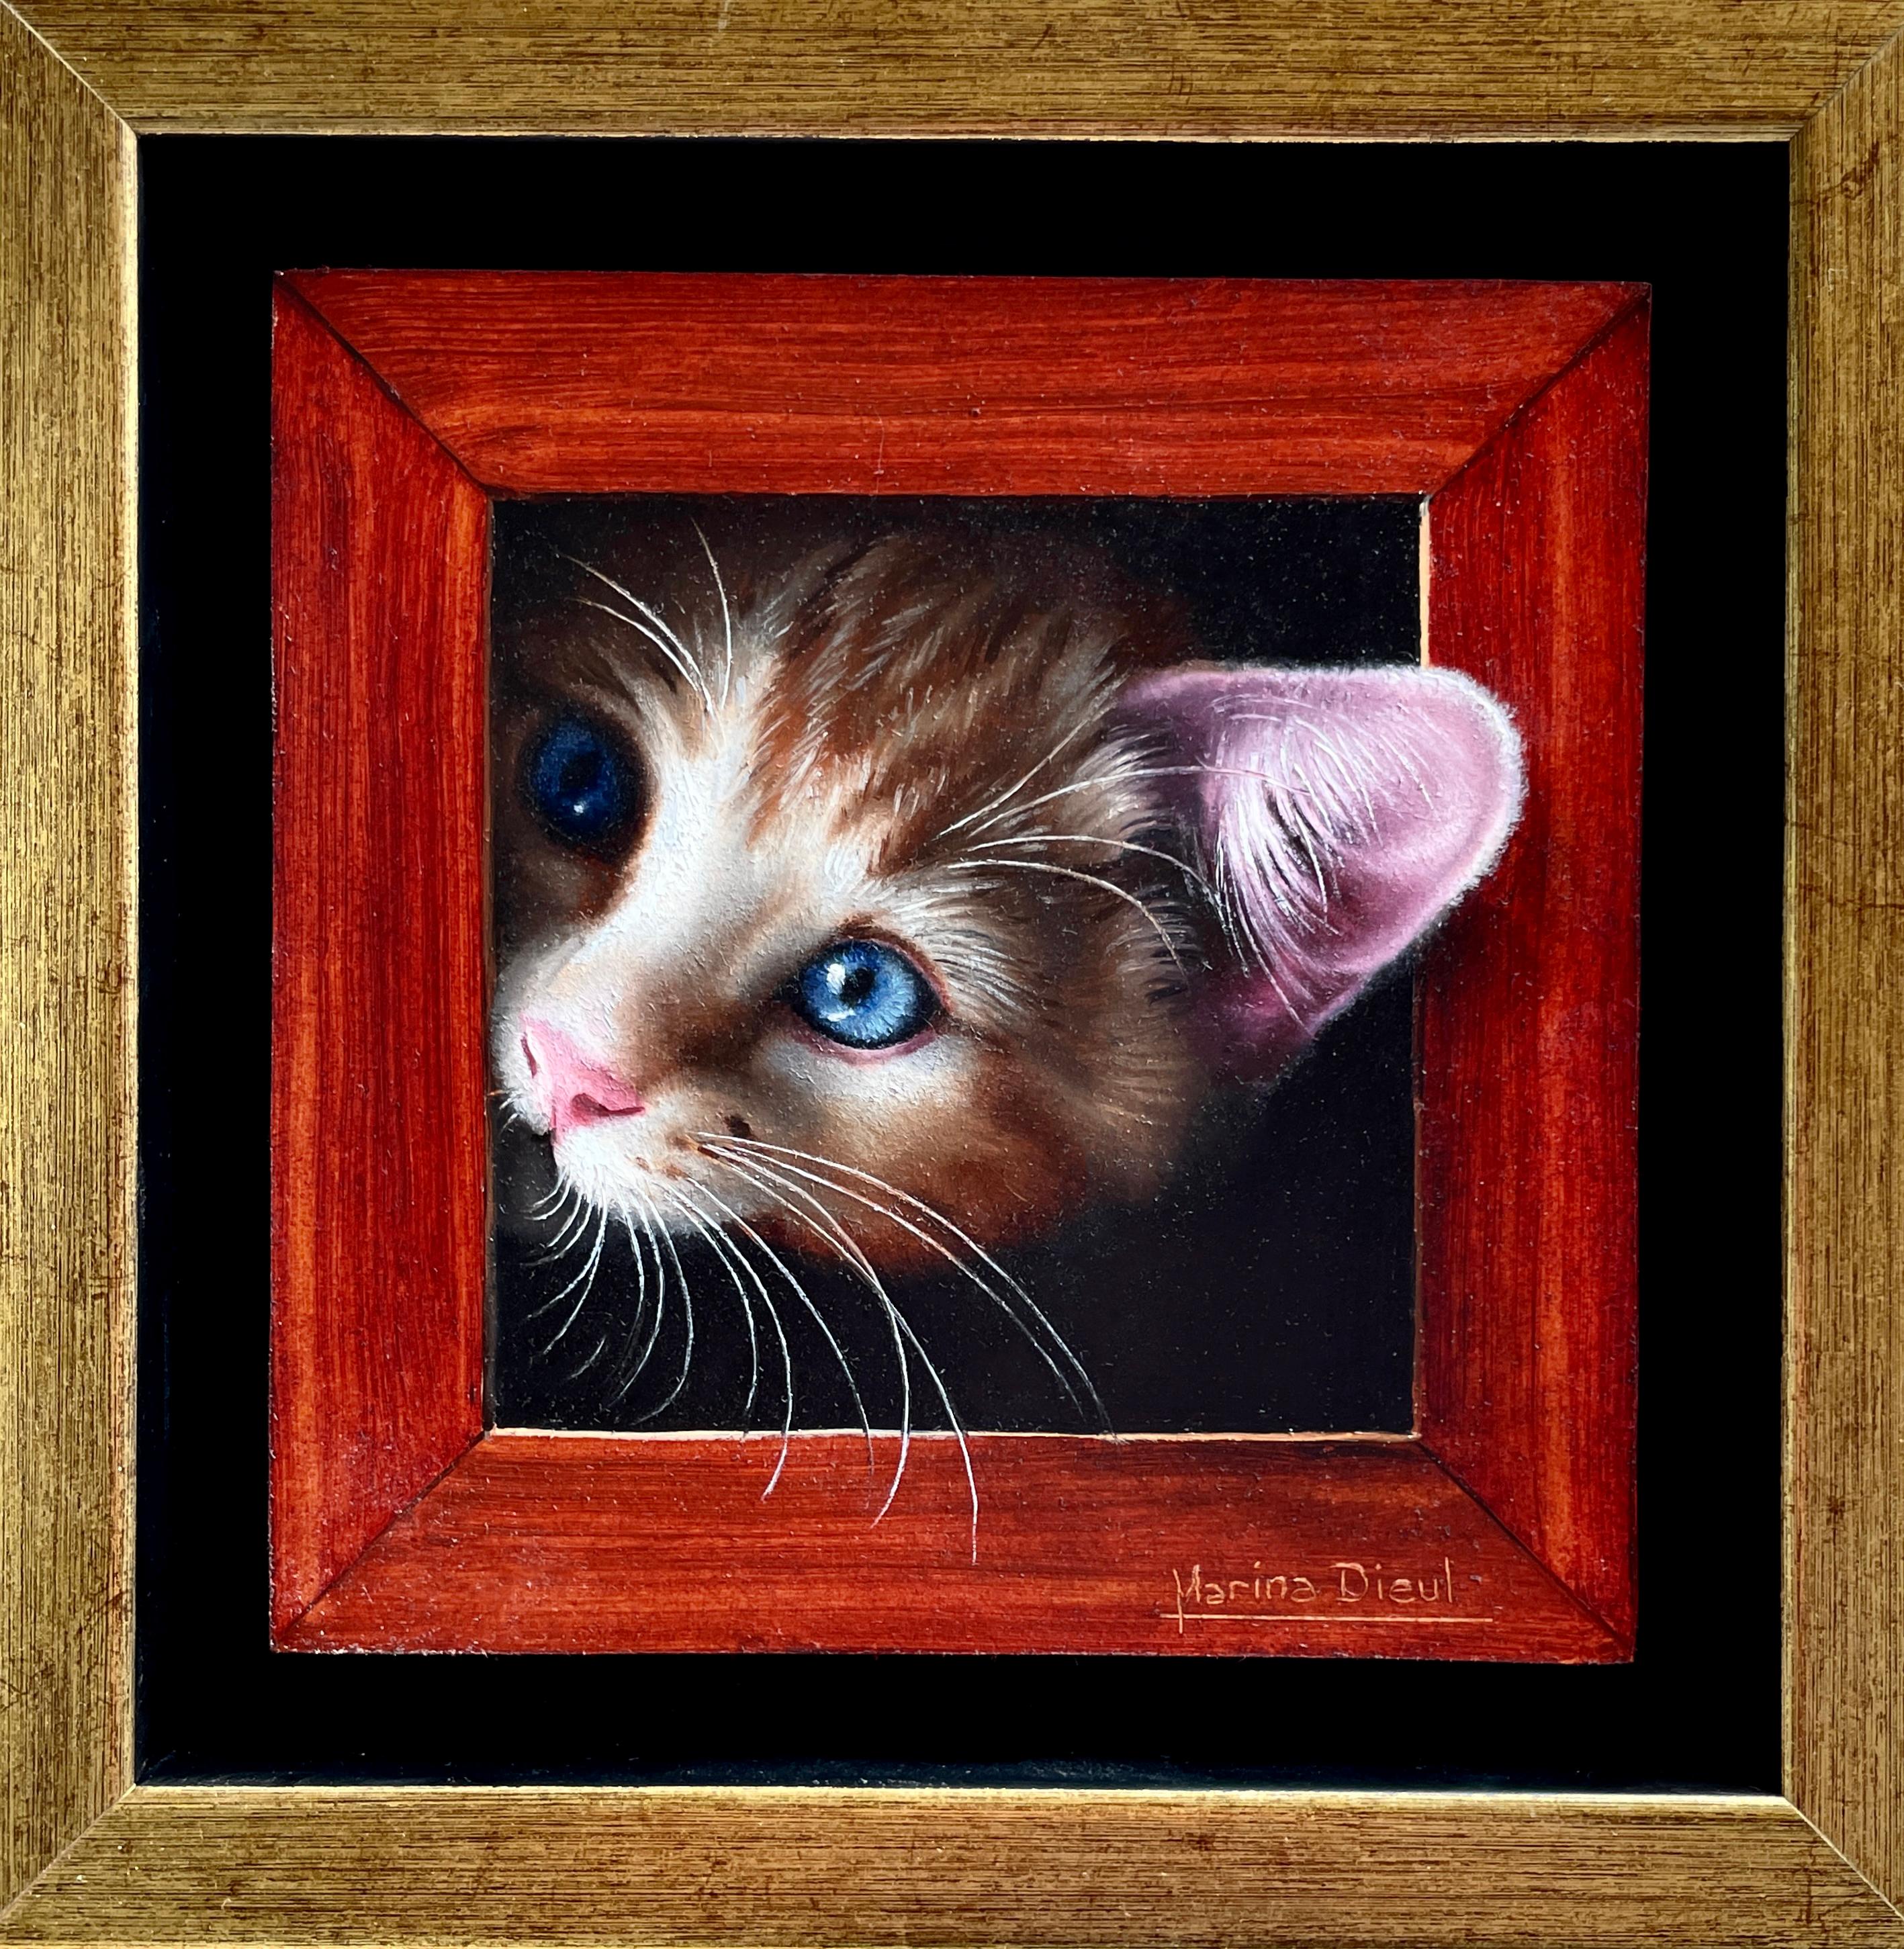 Marina Dieul Figurative Painting - "Chat 34"  Trompe L'oeil Original Oil Painting of a Cat